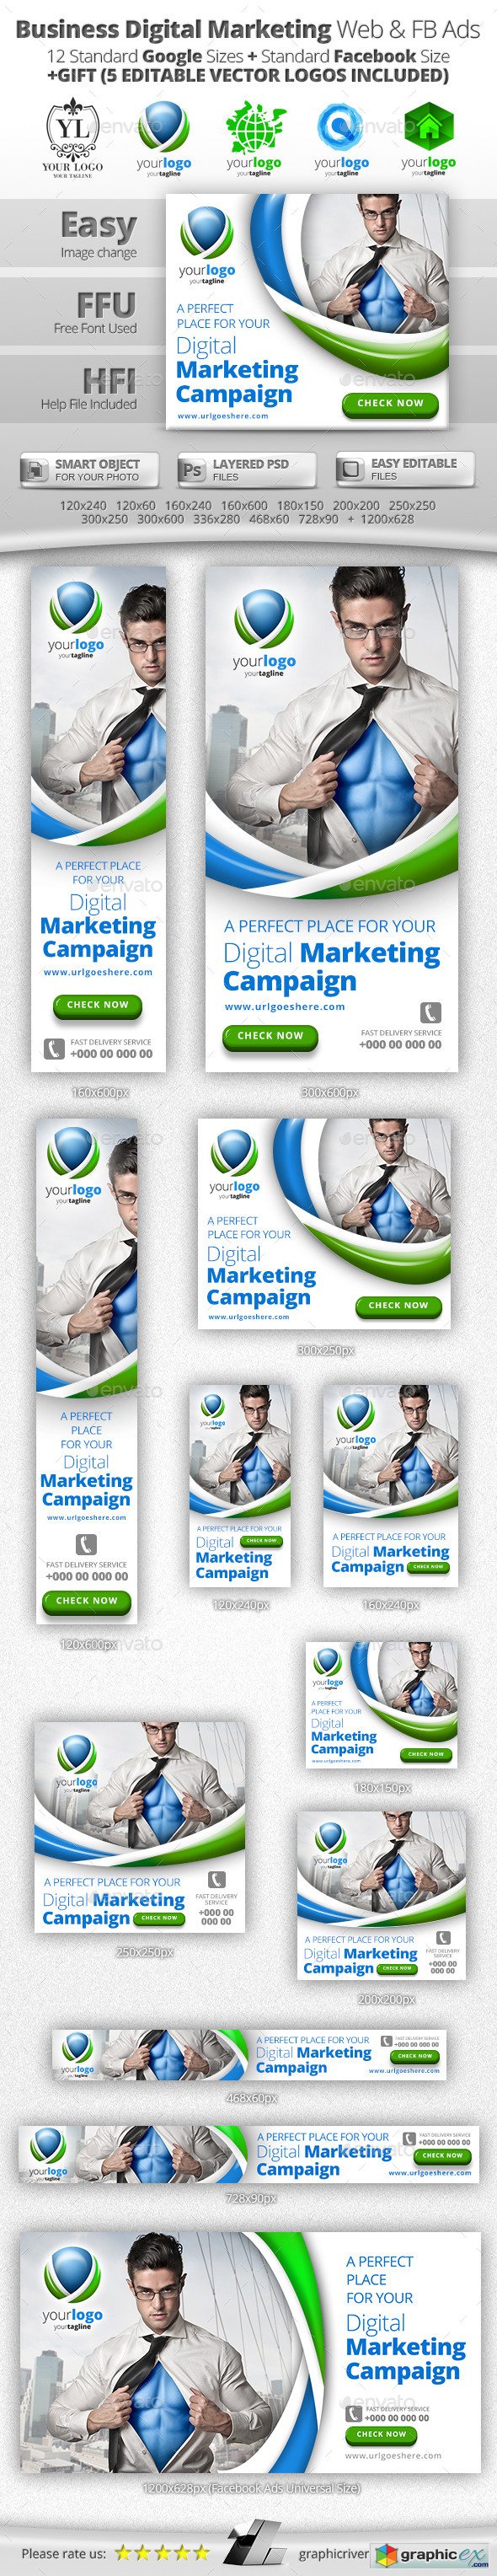 Business Digital Marketing Web & Facebook Banners